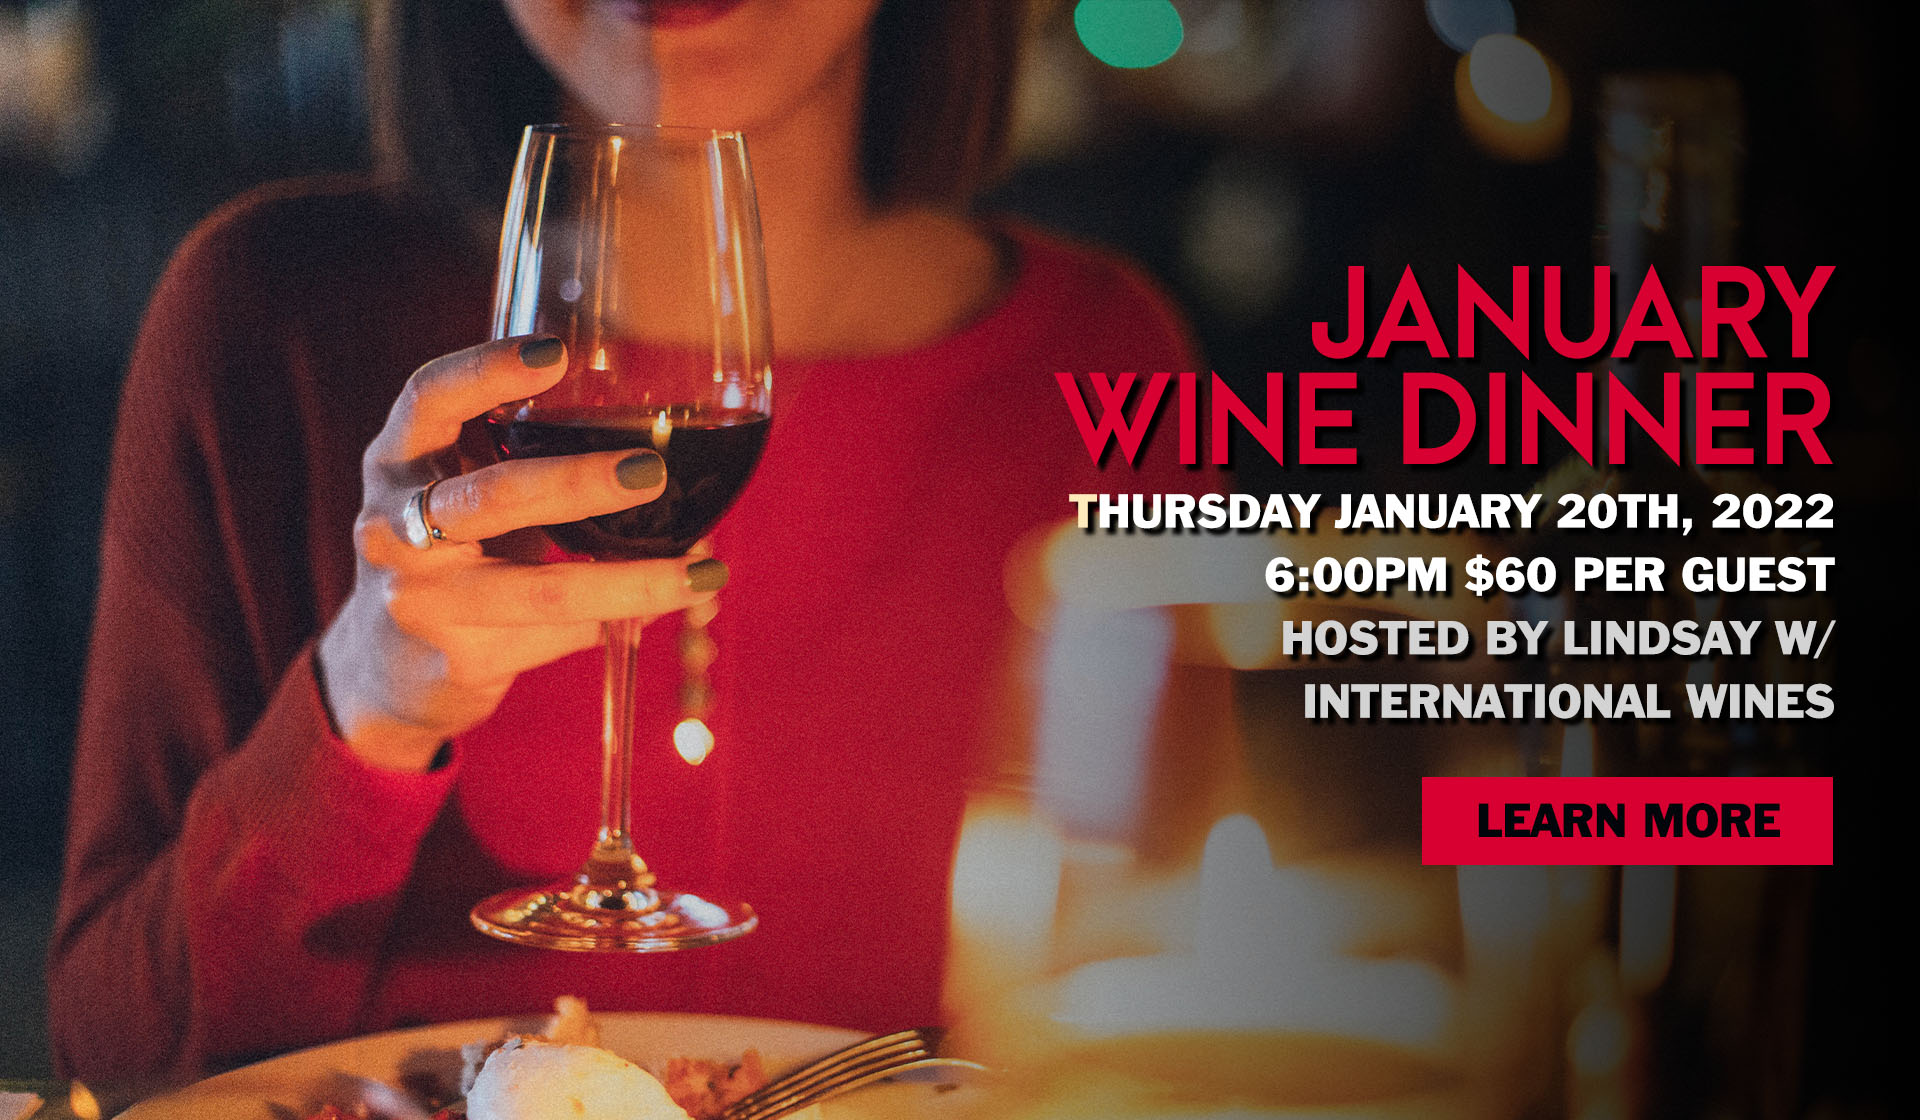 View the menu for Villaggio's January Wine Dinner